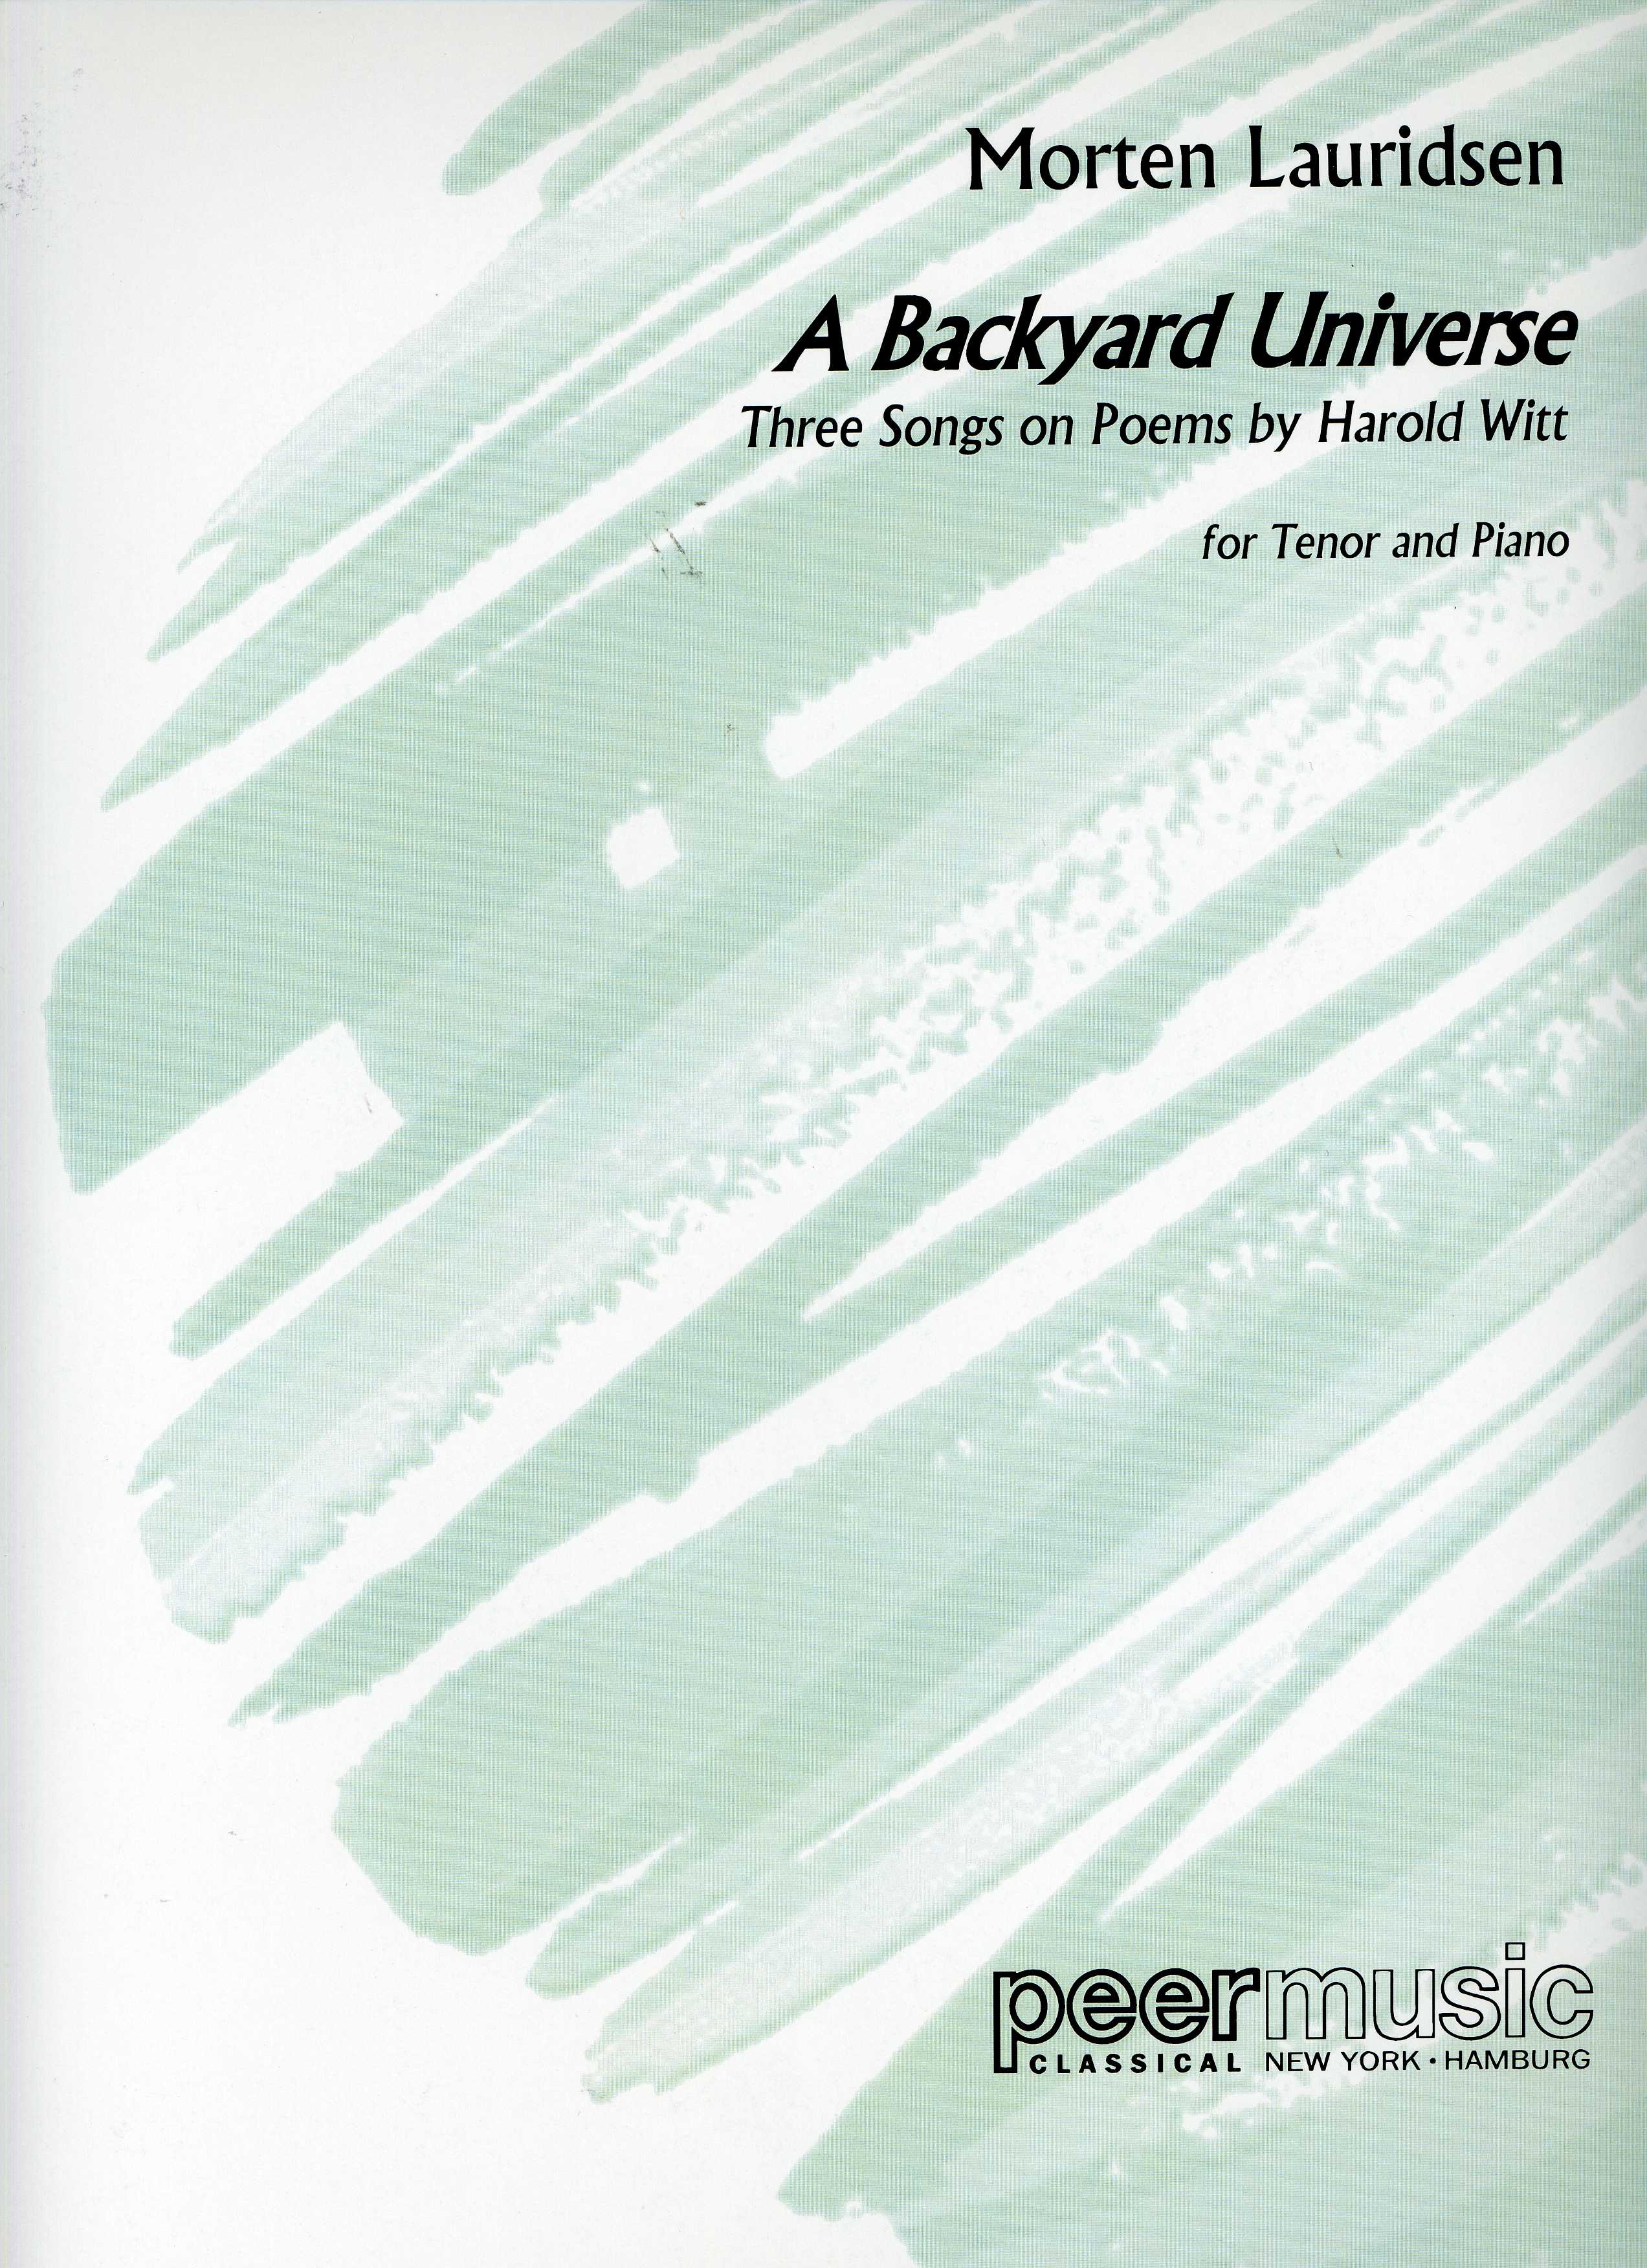 A Backyard Universe